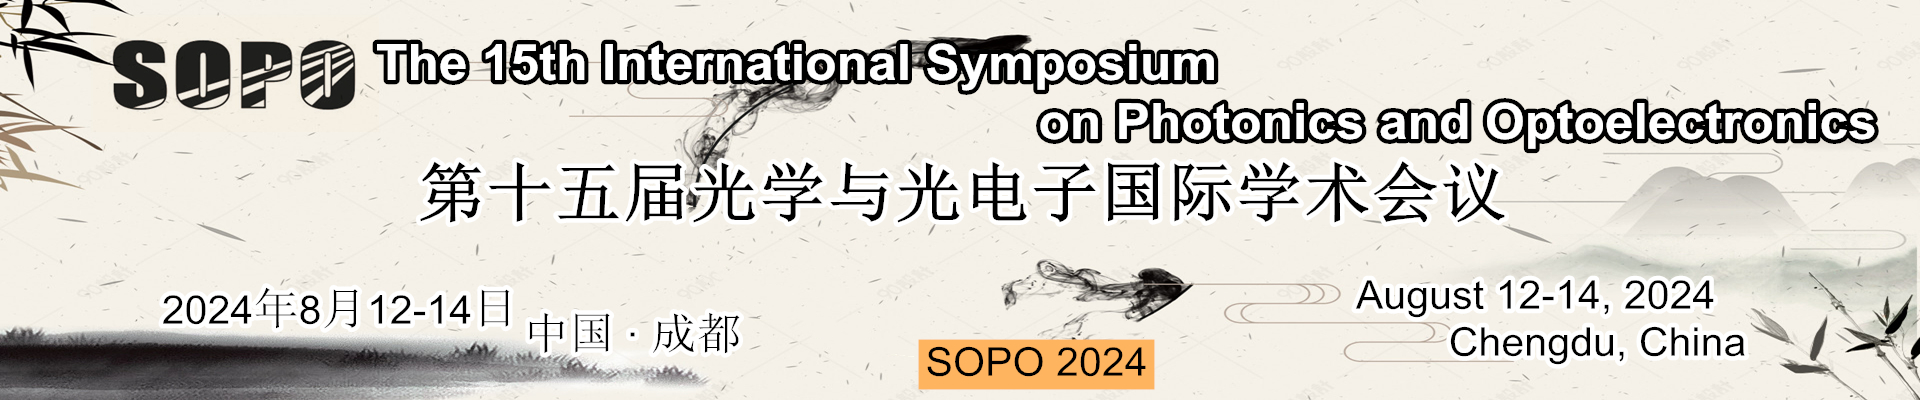 The 15th International Symposium on Photonics and Optoelectronics (SOPO 2024), Chengdu, Sichuan, China